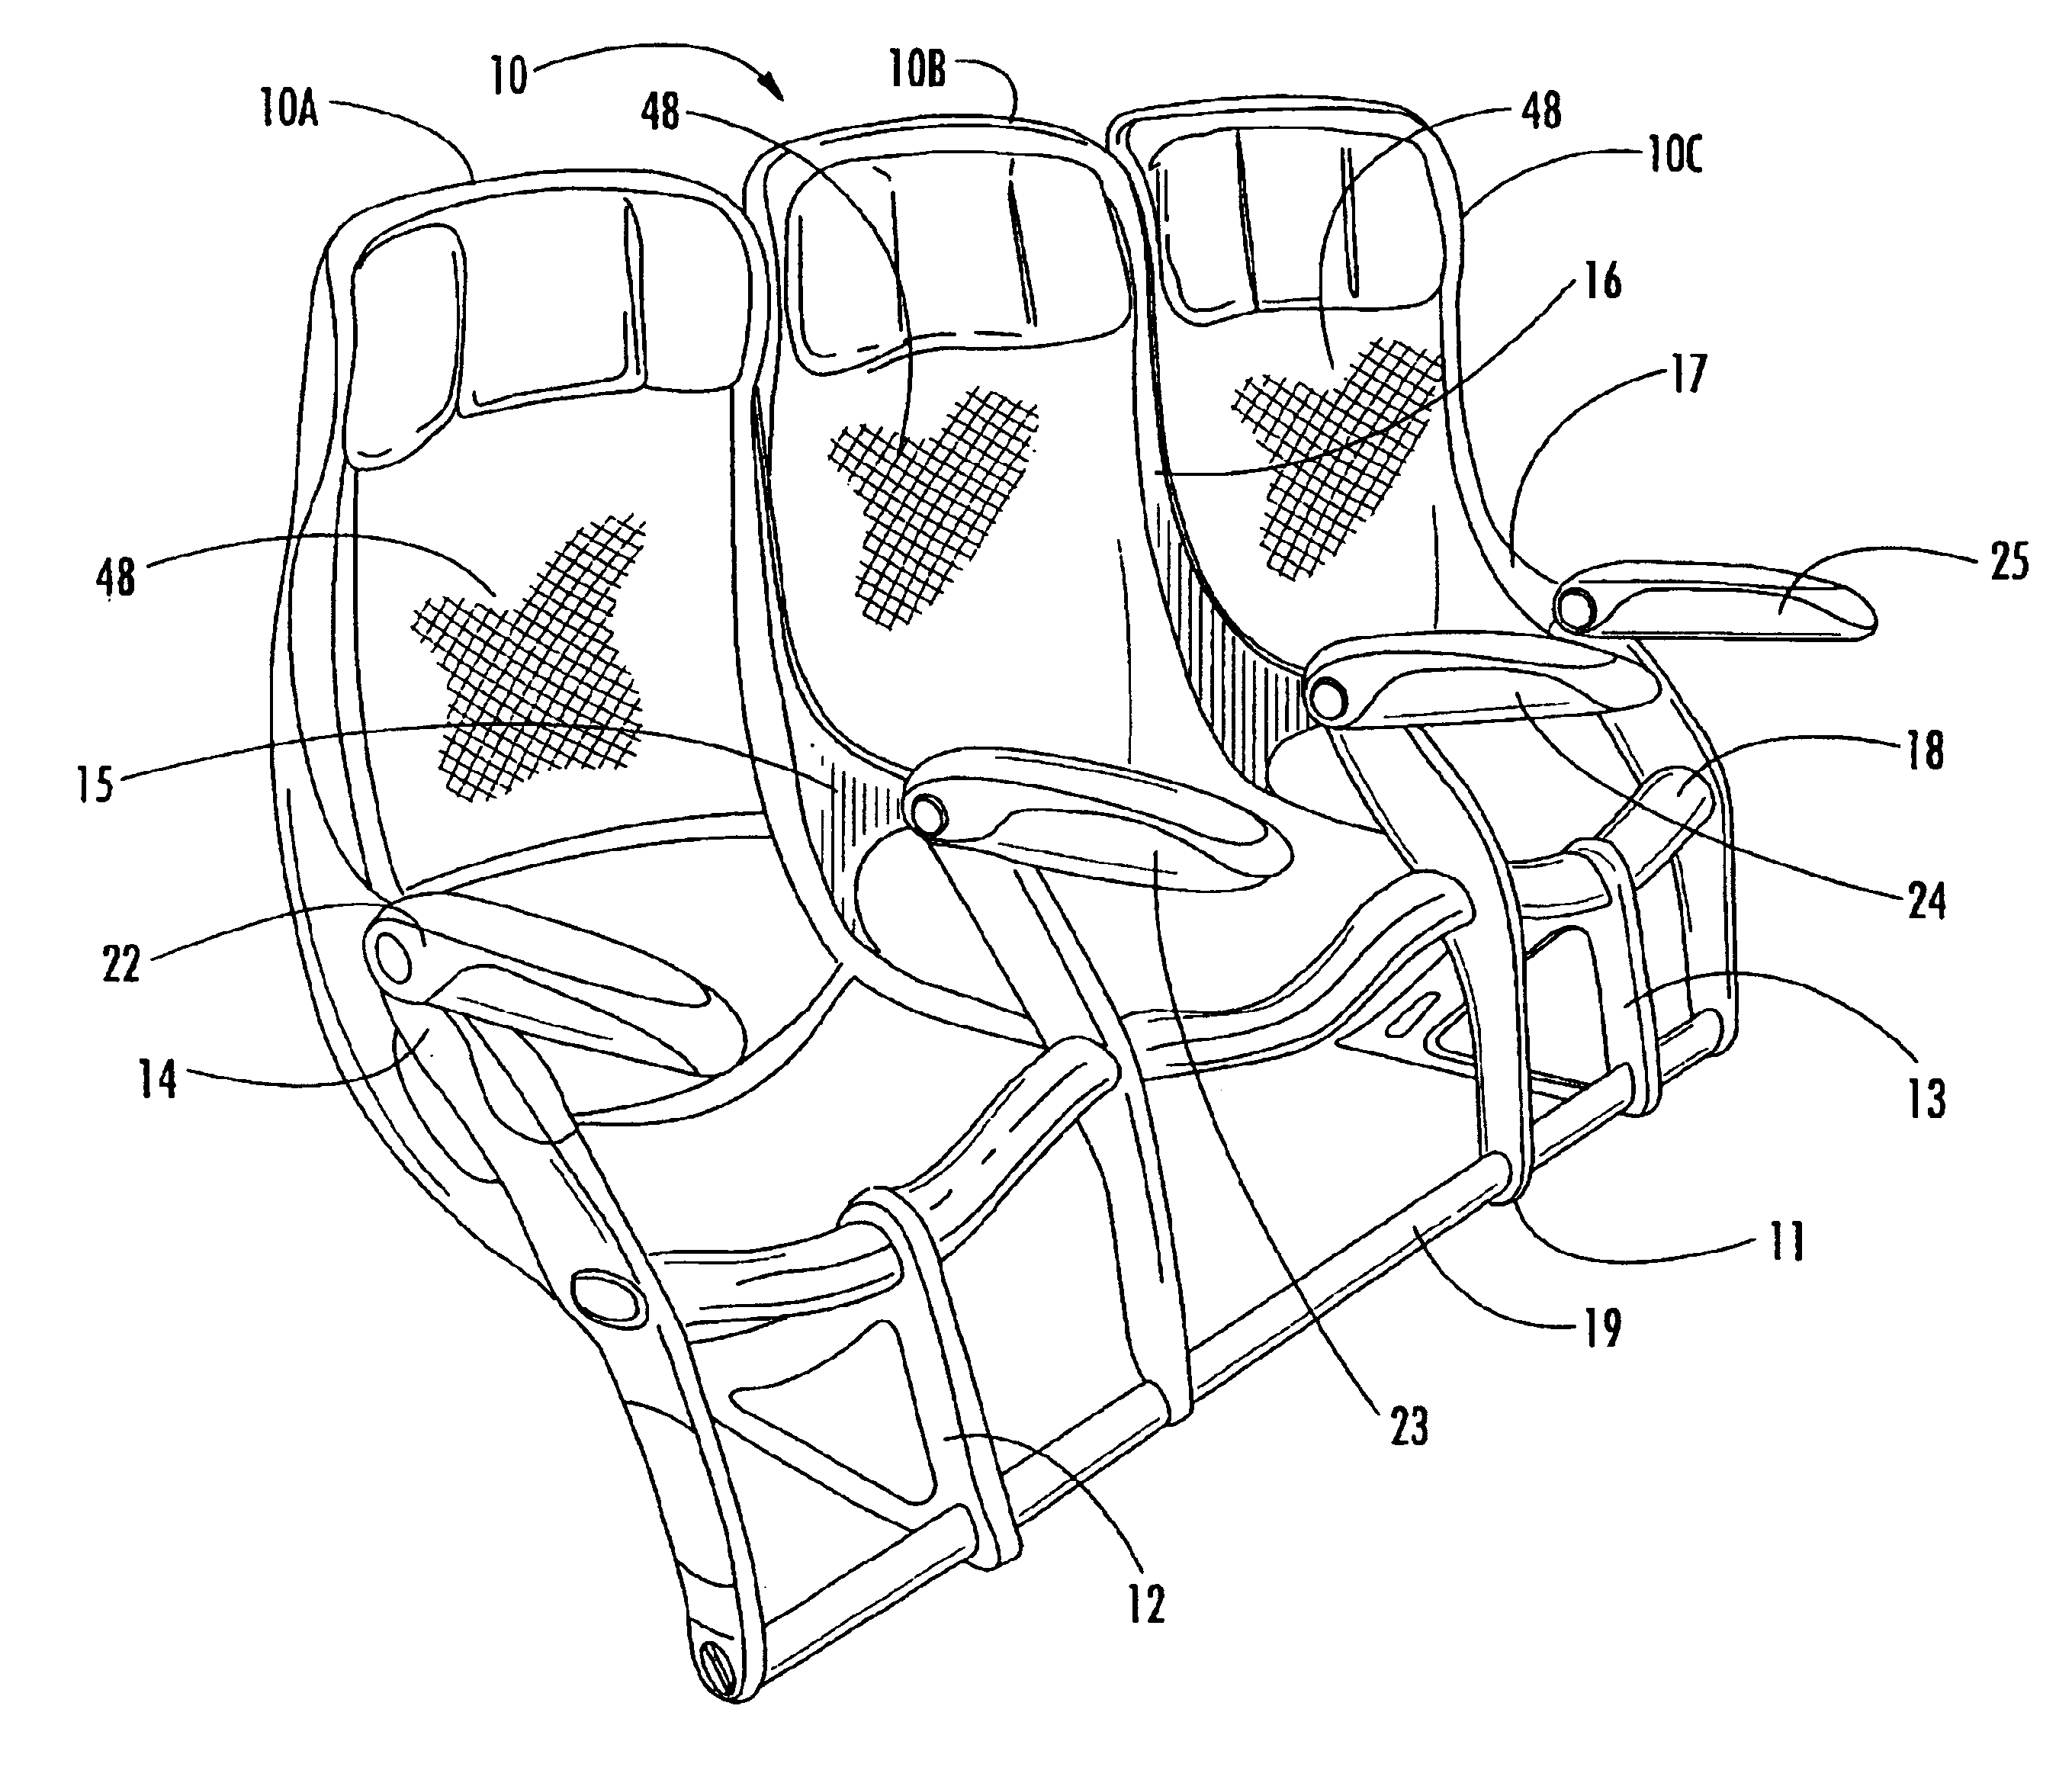 Single beam aircraft passenger seat